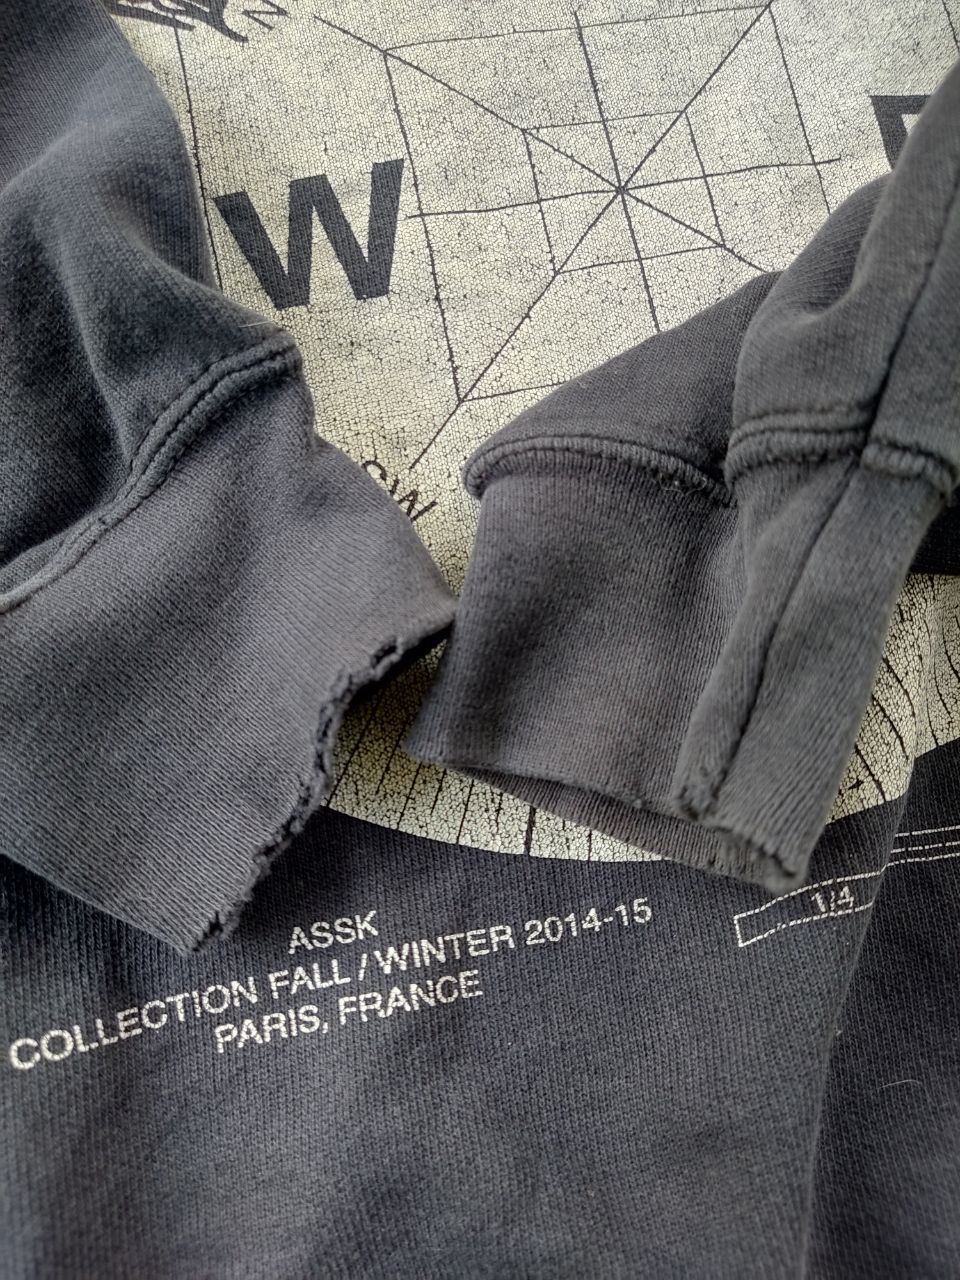 Rare🔥 ASSK Compass Collection Fall/Winter 2014-15 Paris France Sweatshirts - 7